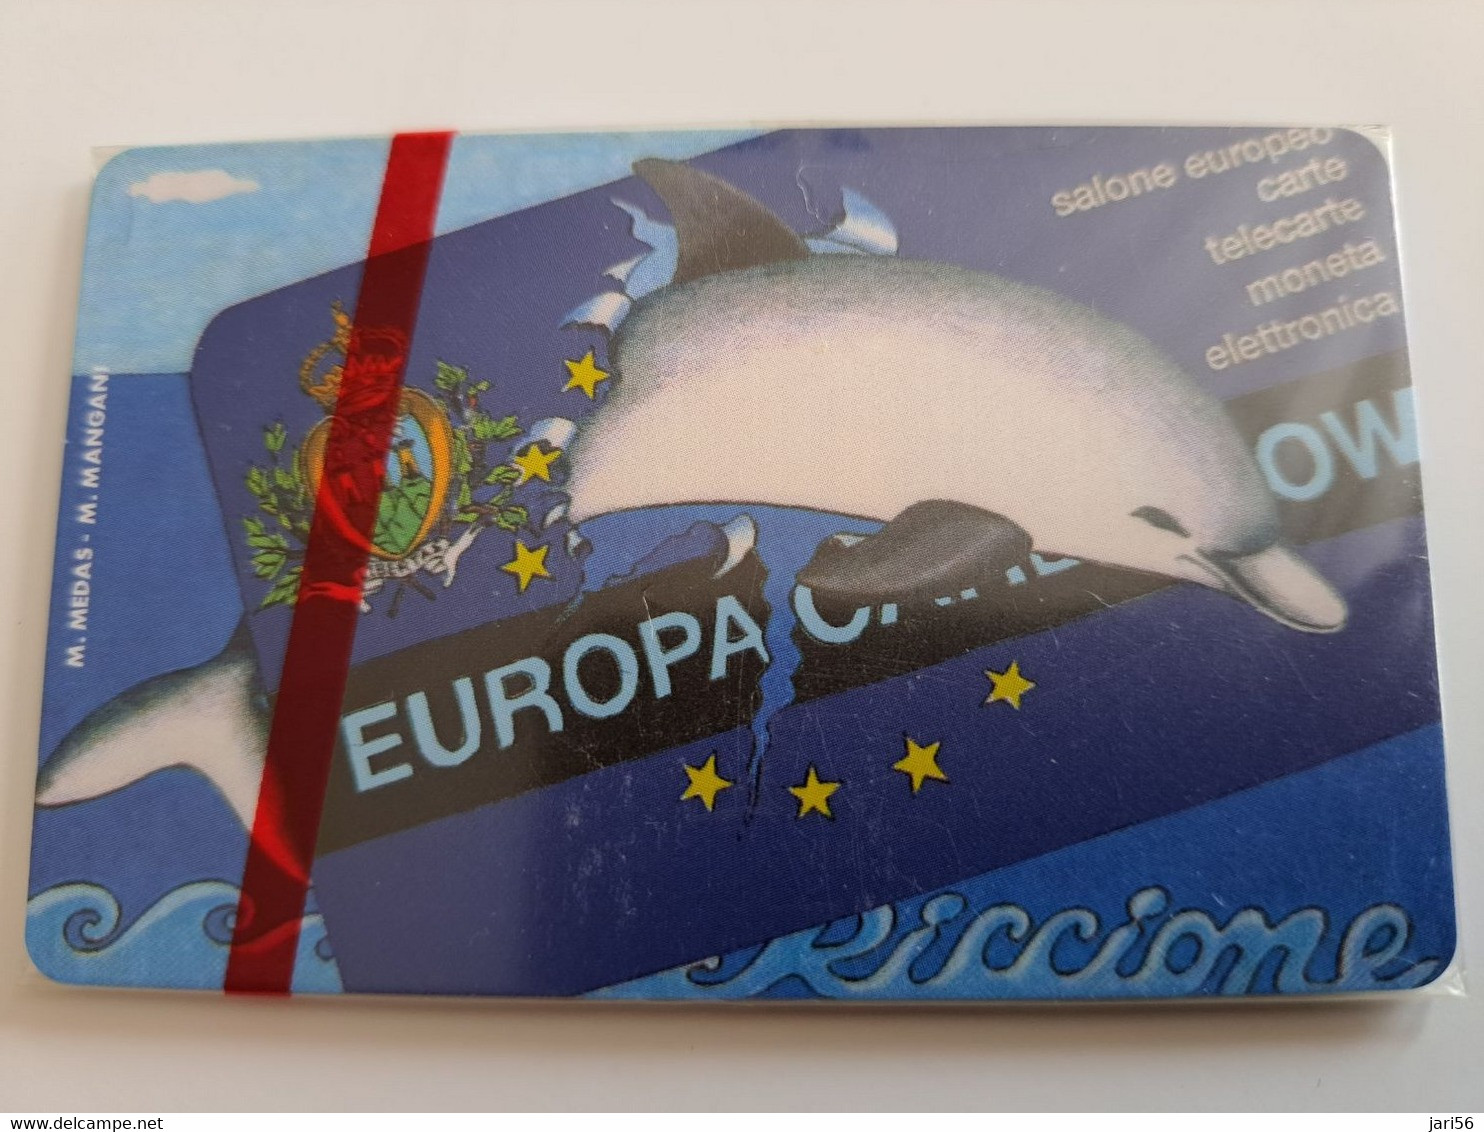 SAN MARINO CHIPCARD  L 10.000 /  EUROPA CARD SHOW / DOLPHIN /  MINT IN WRAPPER**   ** 10223 ** - Saint-Marin